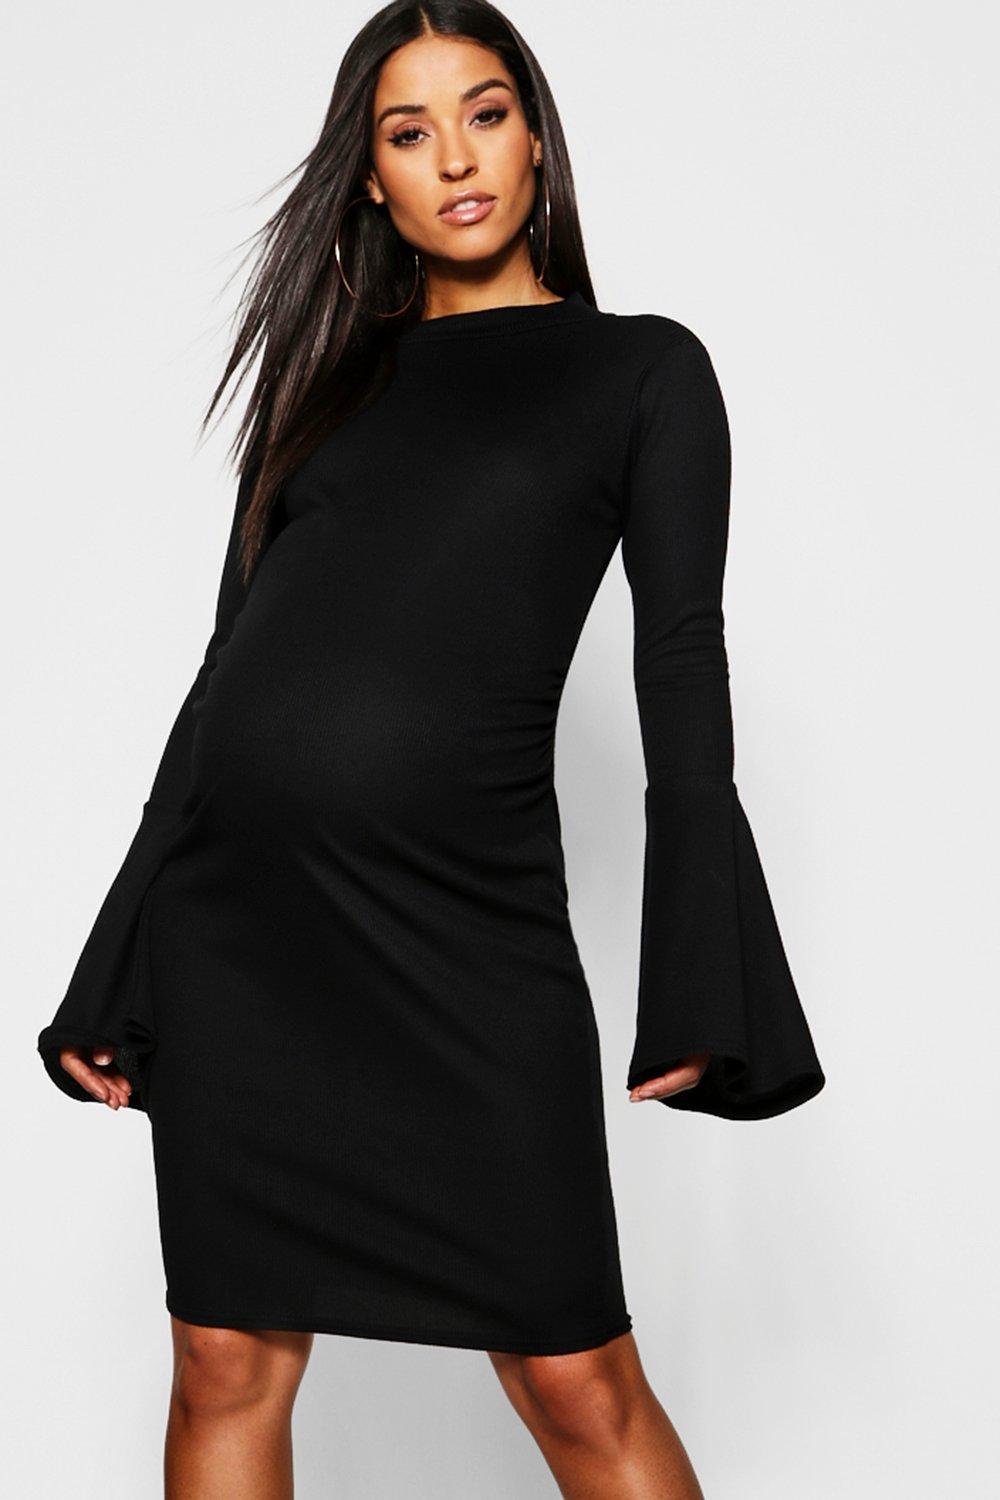 Boohoo Maternity Rib Flute Sleeve Bodycon Midi Dress in Black - Lyst